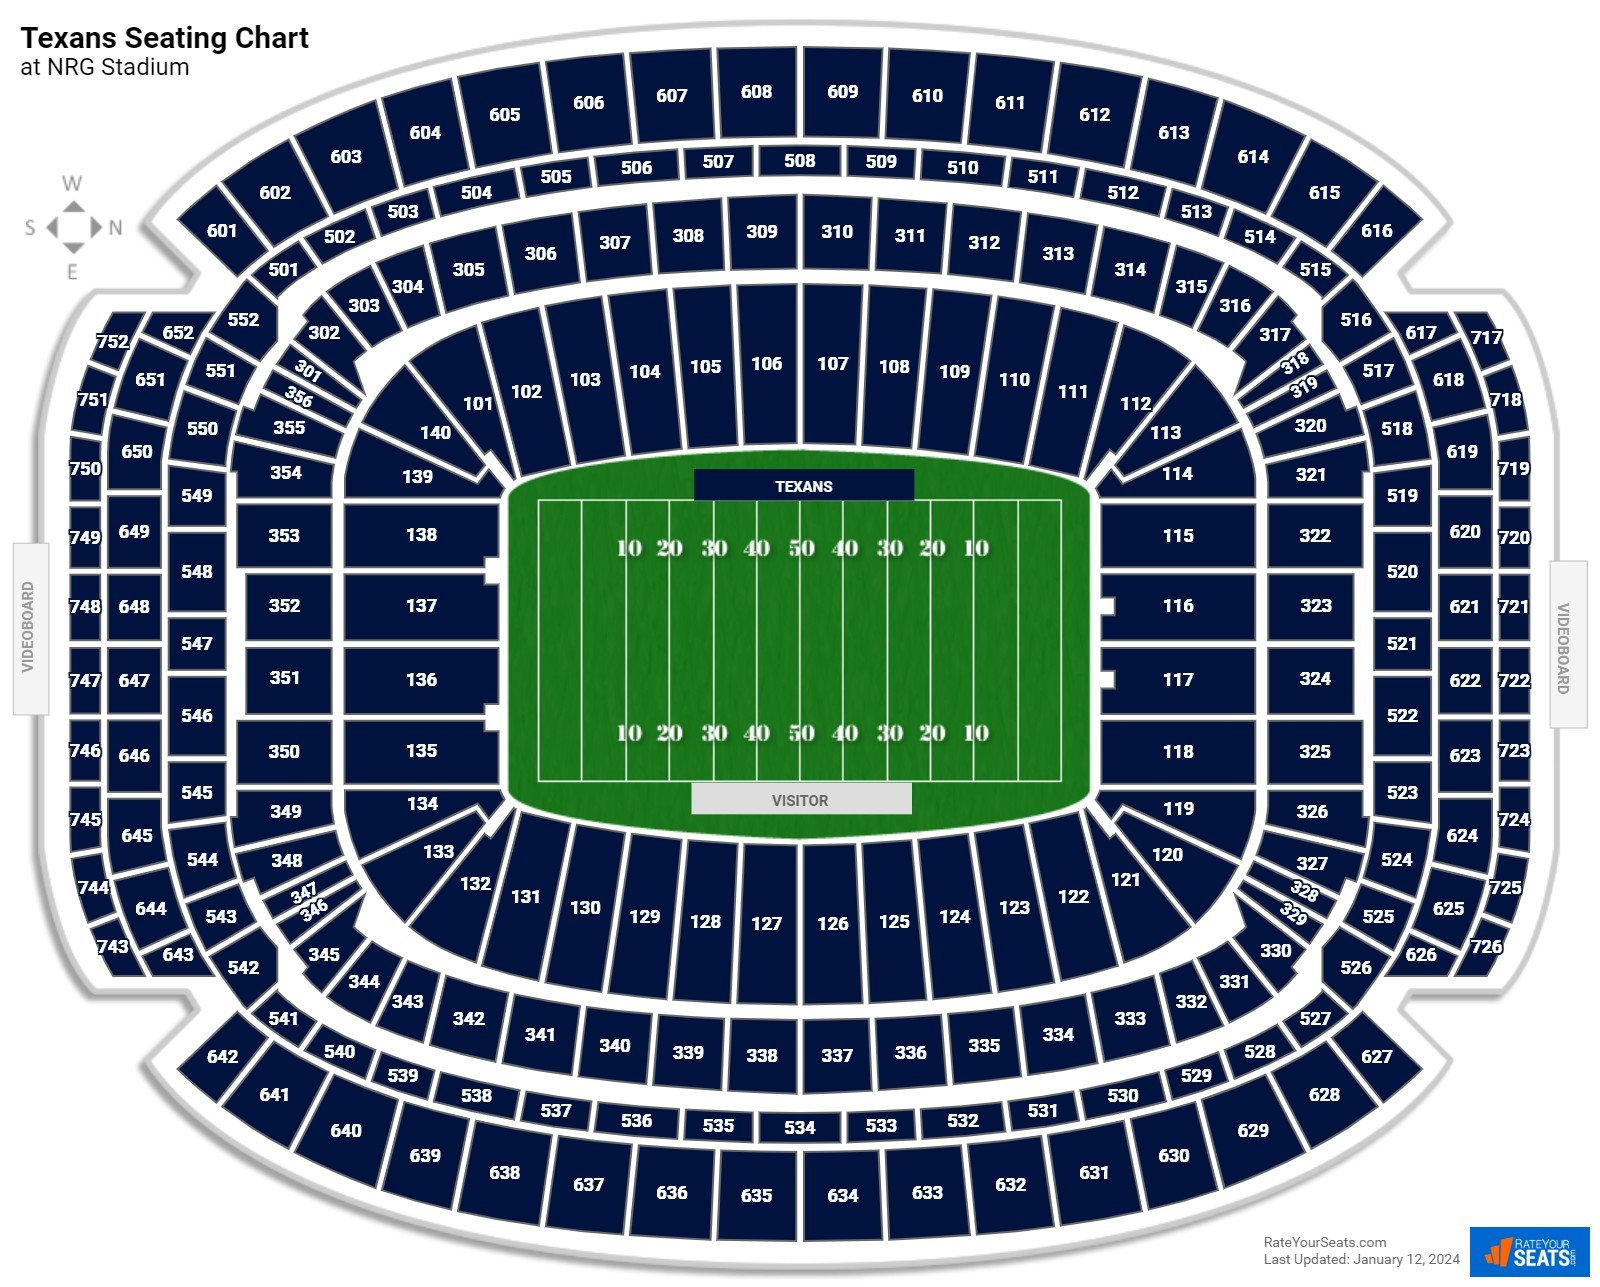 Houston Texans Seating Chart at NRG Stadium